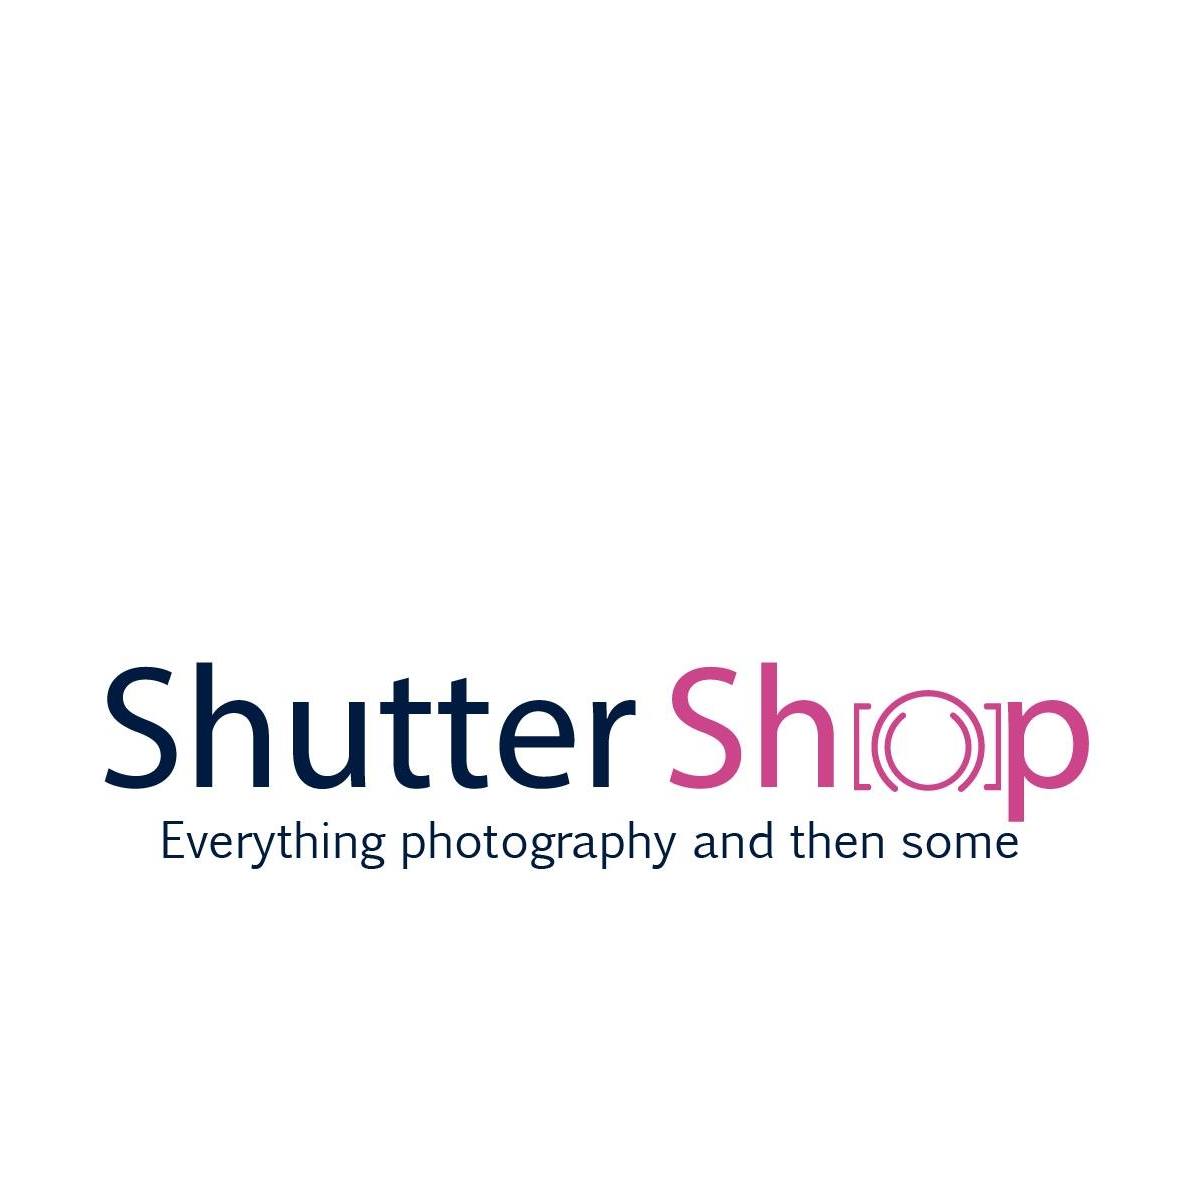 شتر شوب Shutter Shop